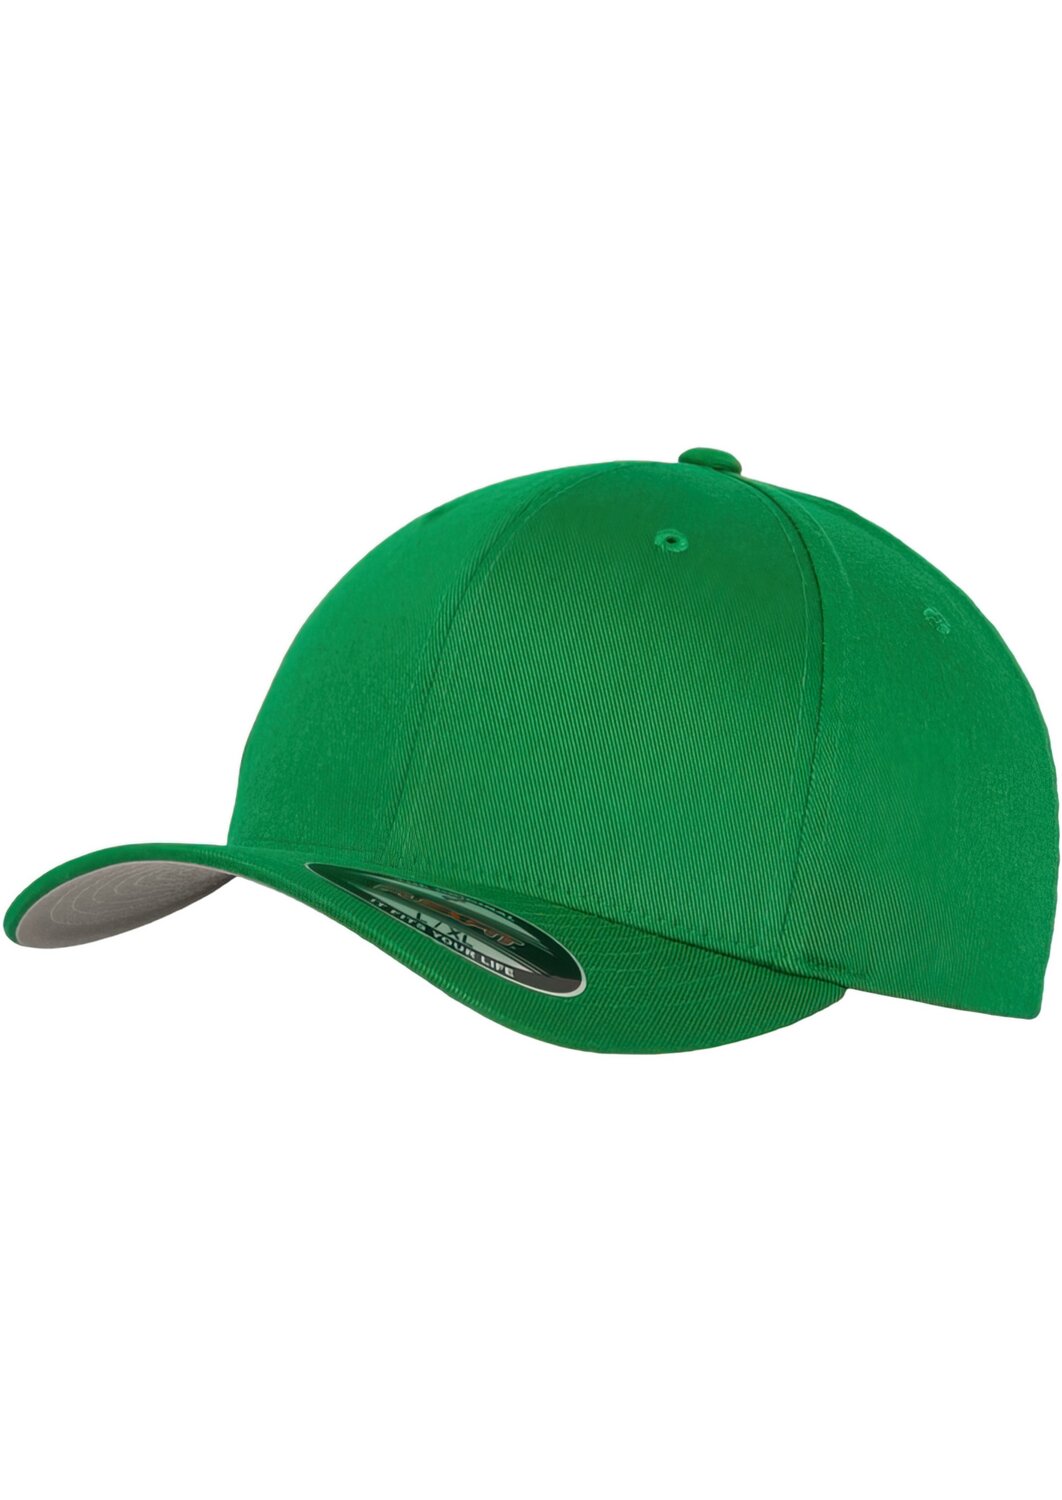 Baseball Cap Wooly pepper MAXISCOOT green Flexfit | Combed